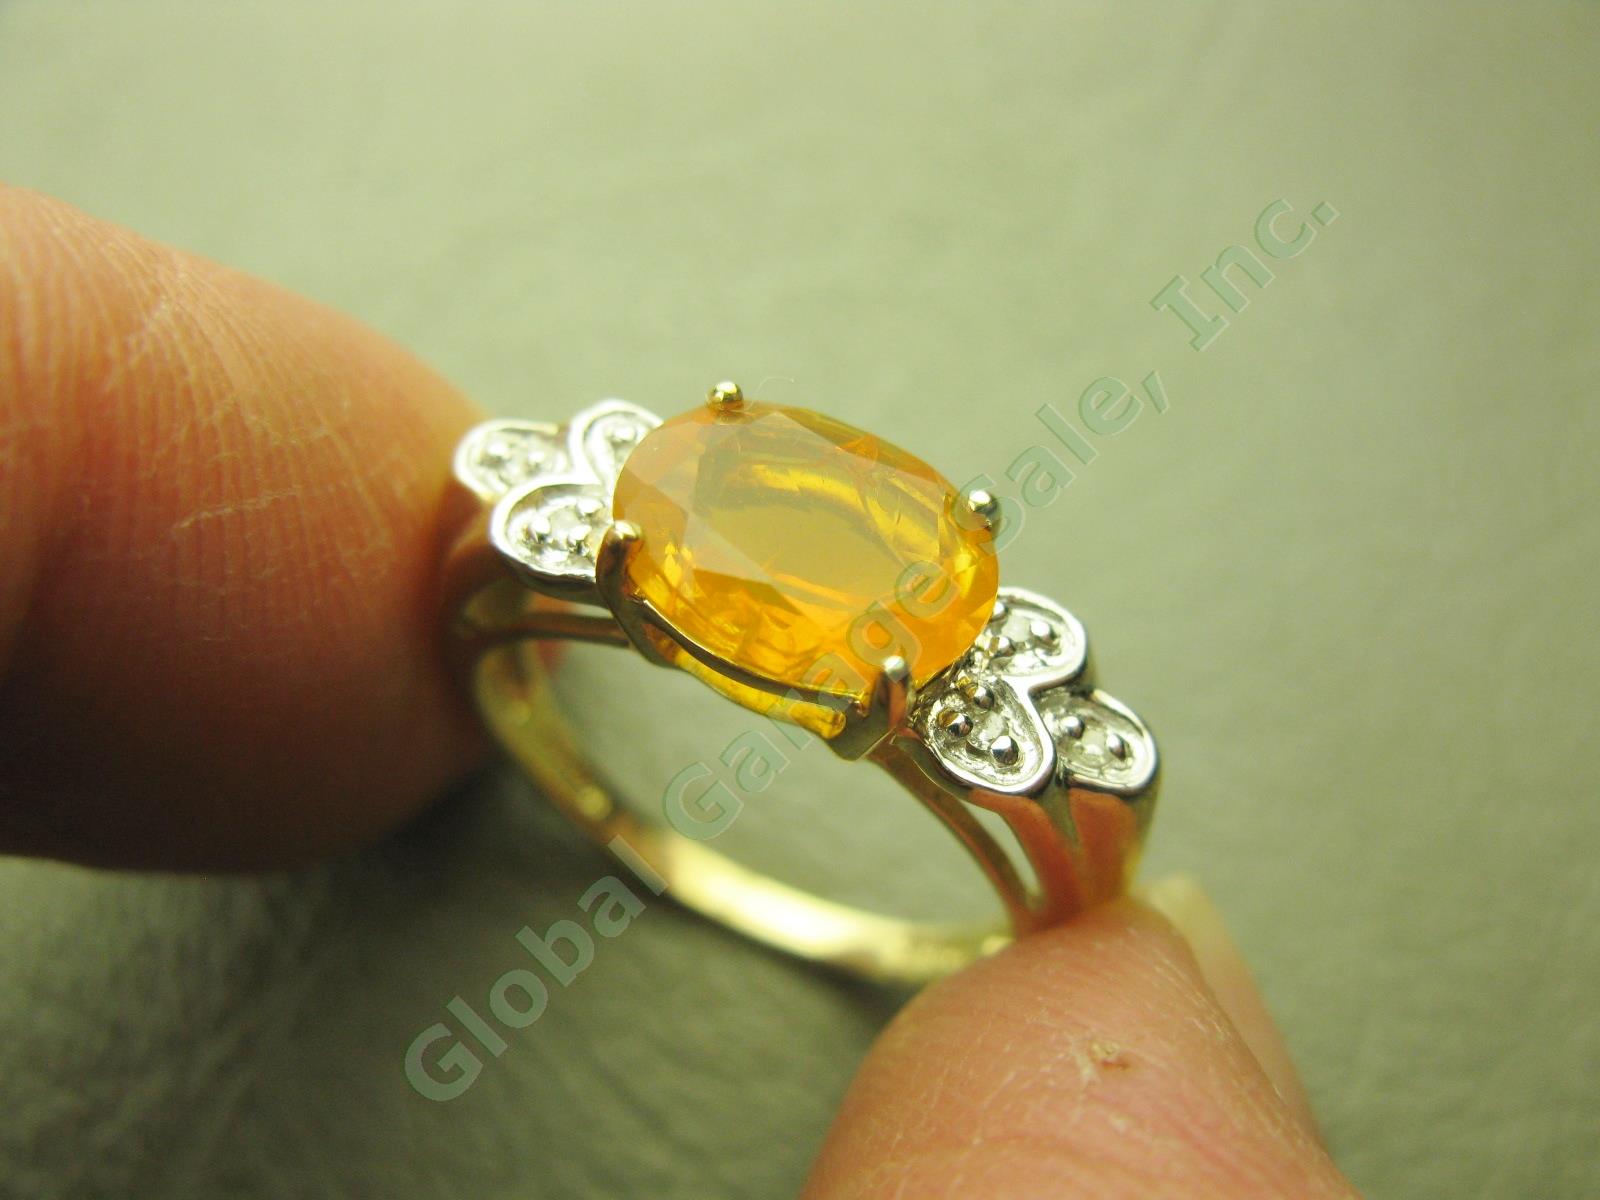 19x 14k 10k Gold Gemstone Rings Lot Earrings 57.7 Grams Not Scrap $1200+ Value!! 3